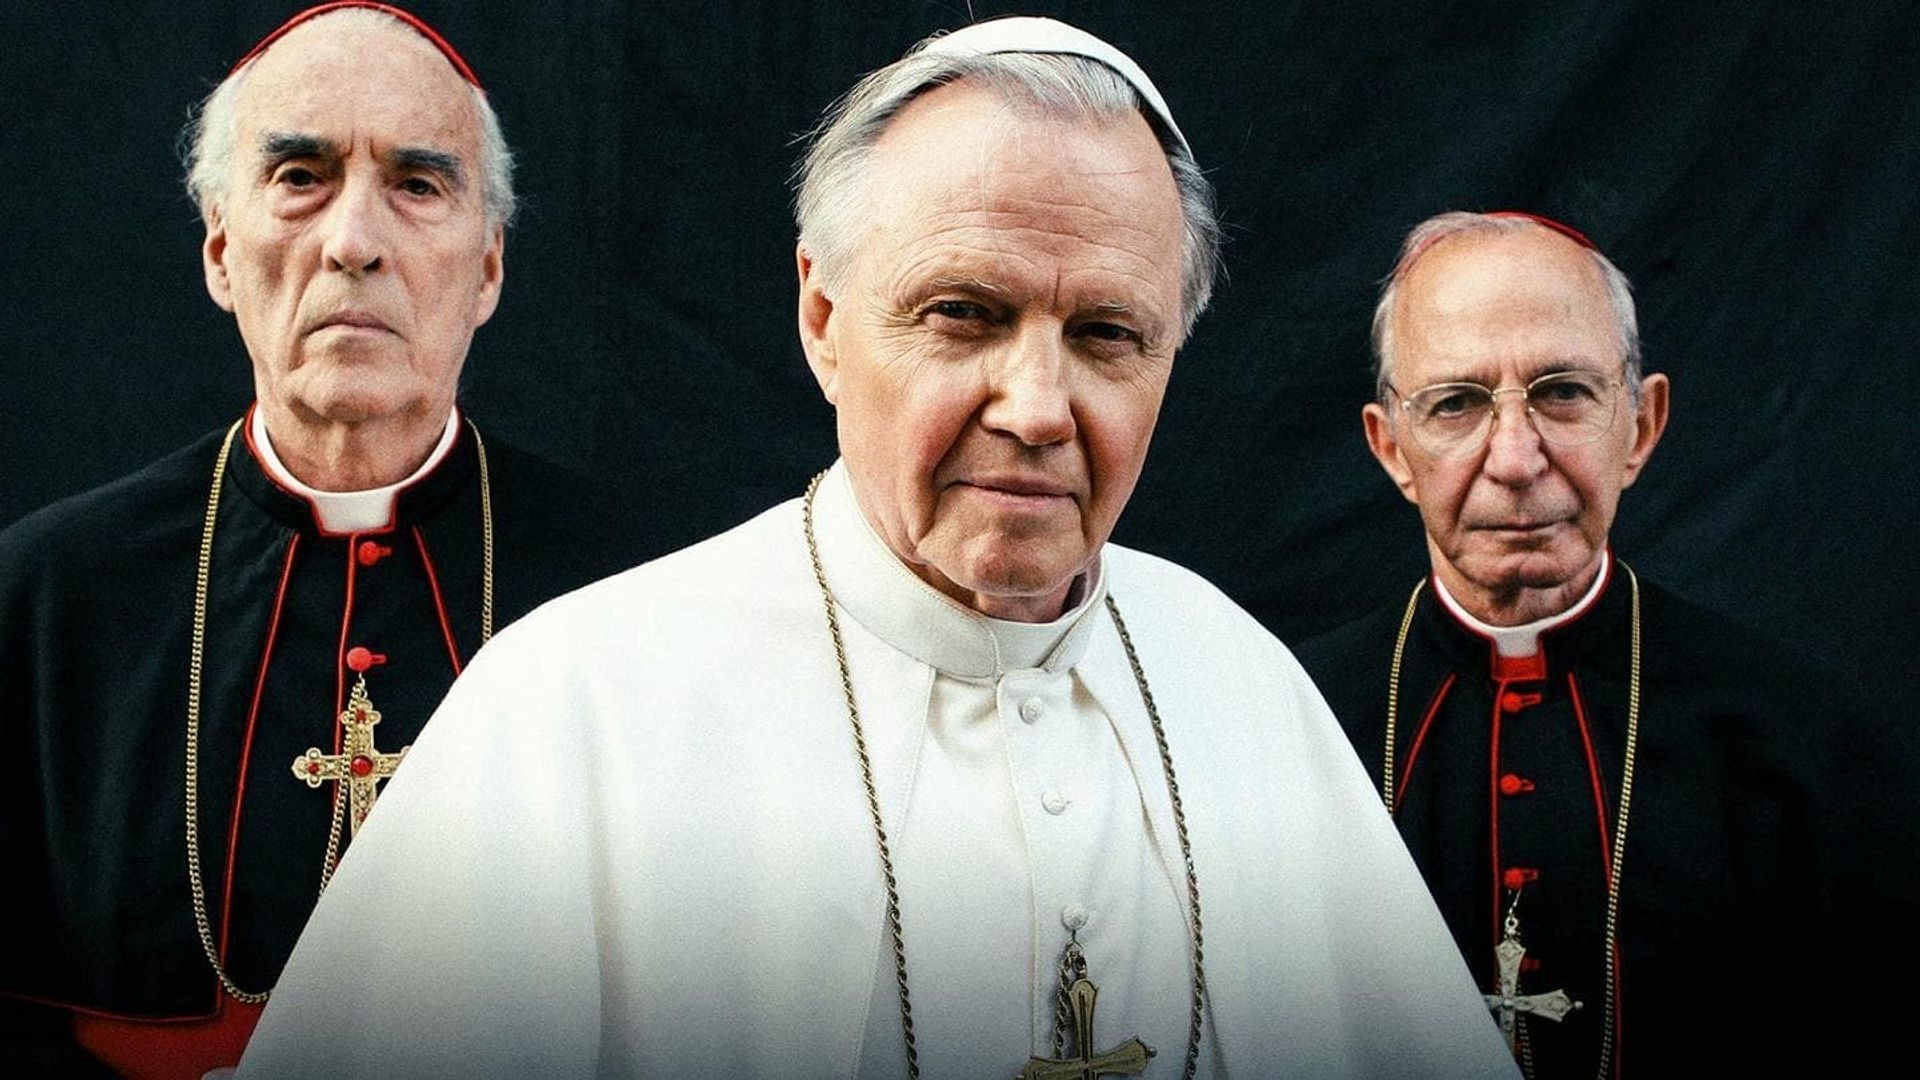 Faith: Pope John Paul II background